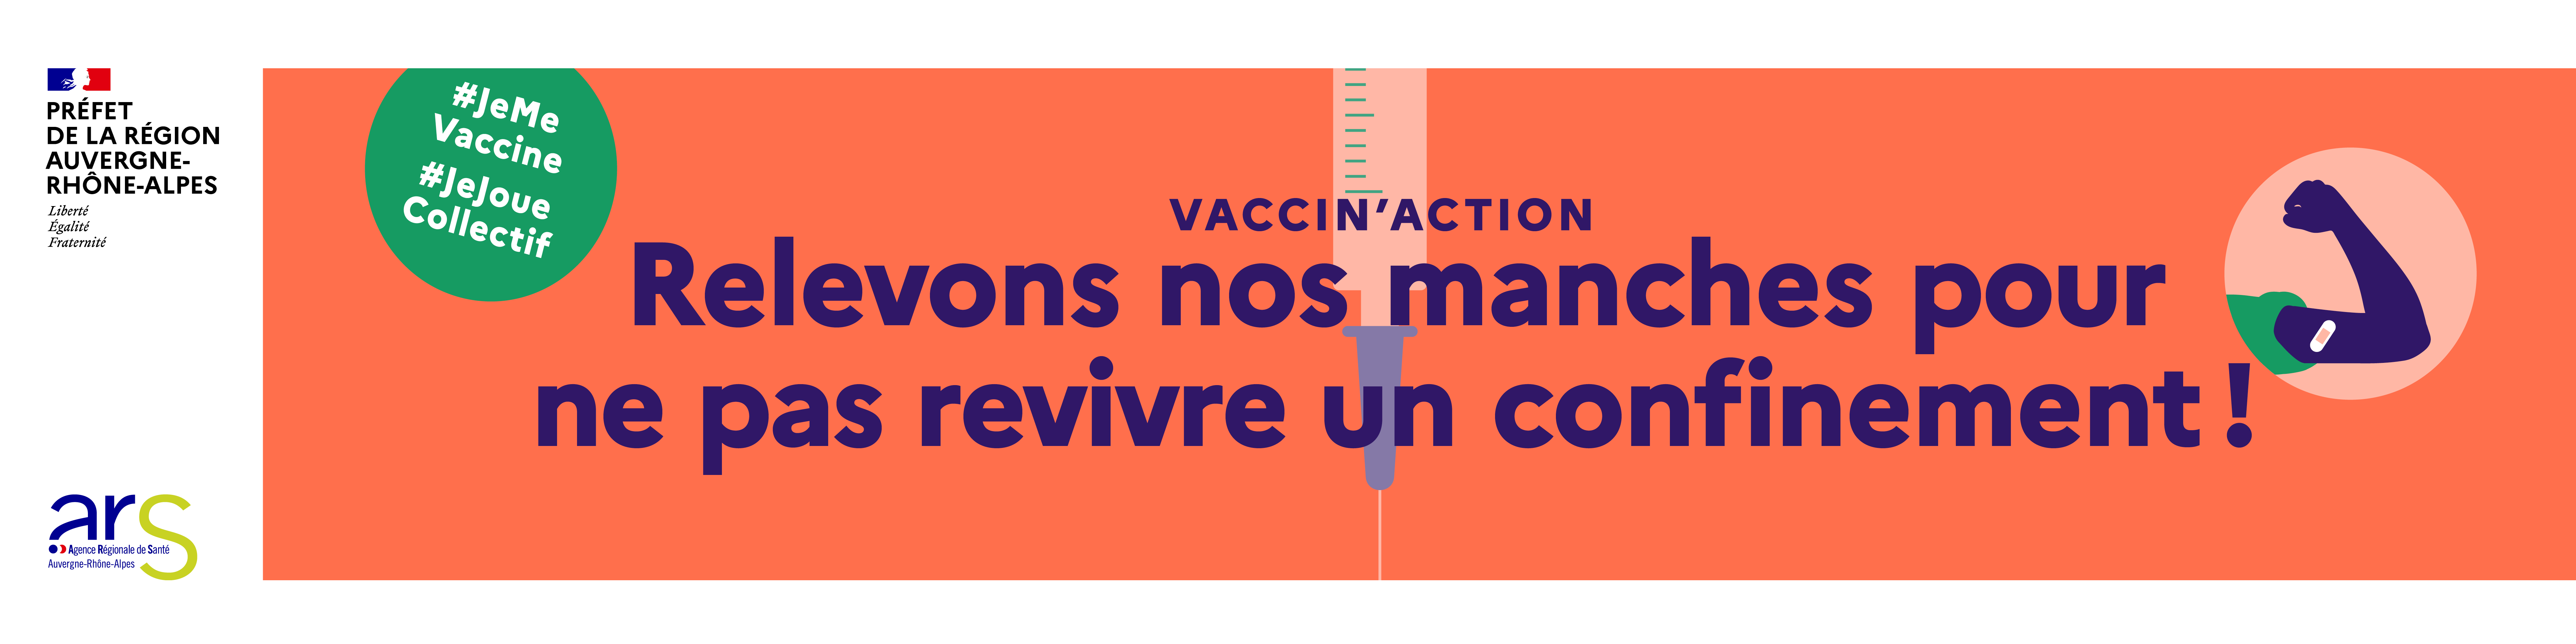 Affiche pour la vaccination COVID 19